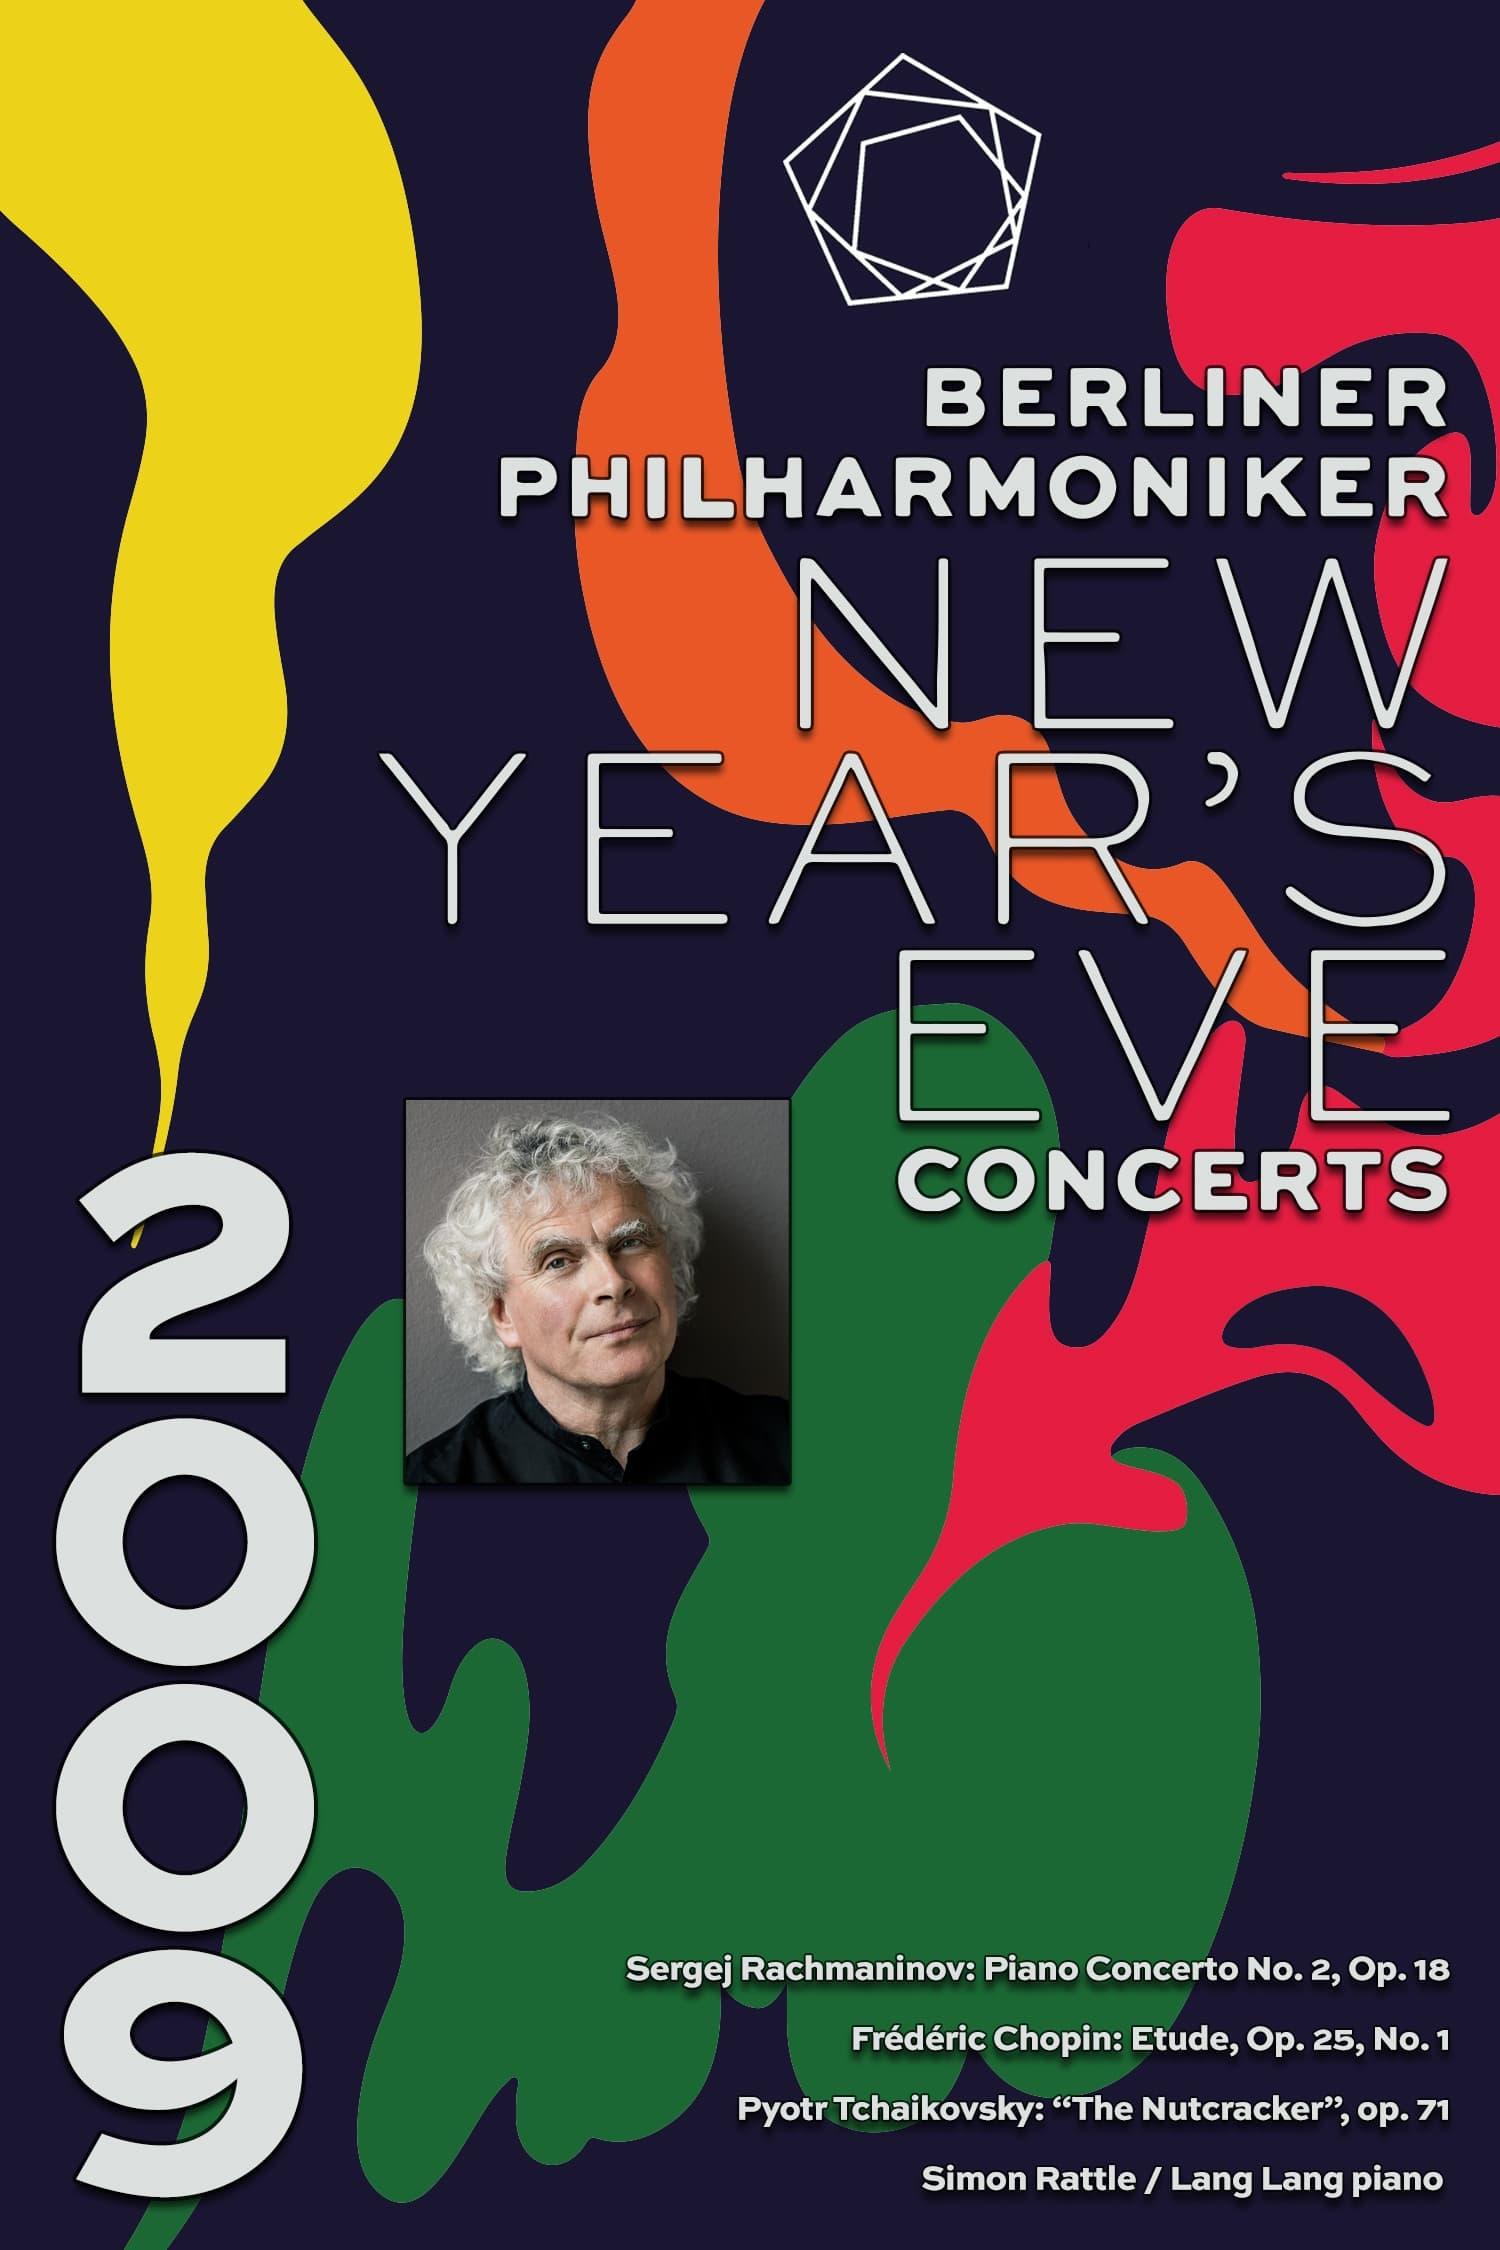 The Berliner Philharmoniker’s New Year’s Eve Concert: 2009 poster